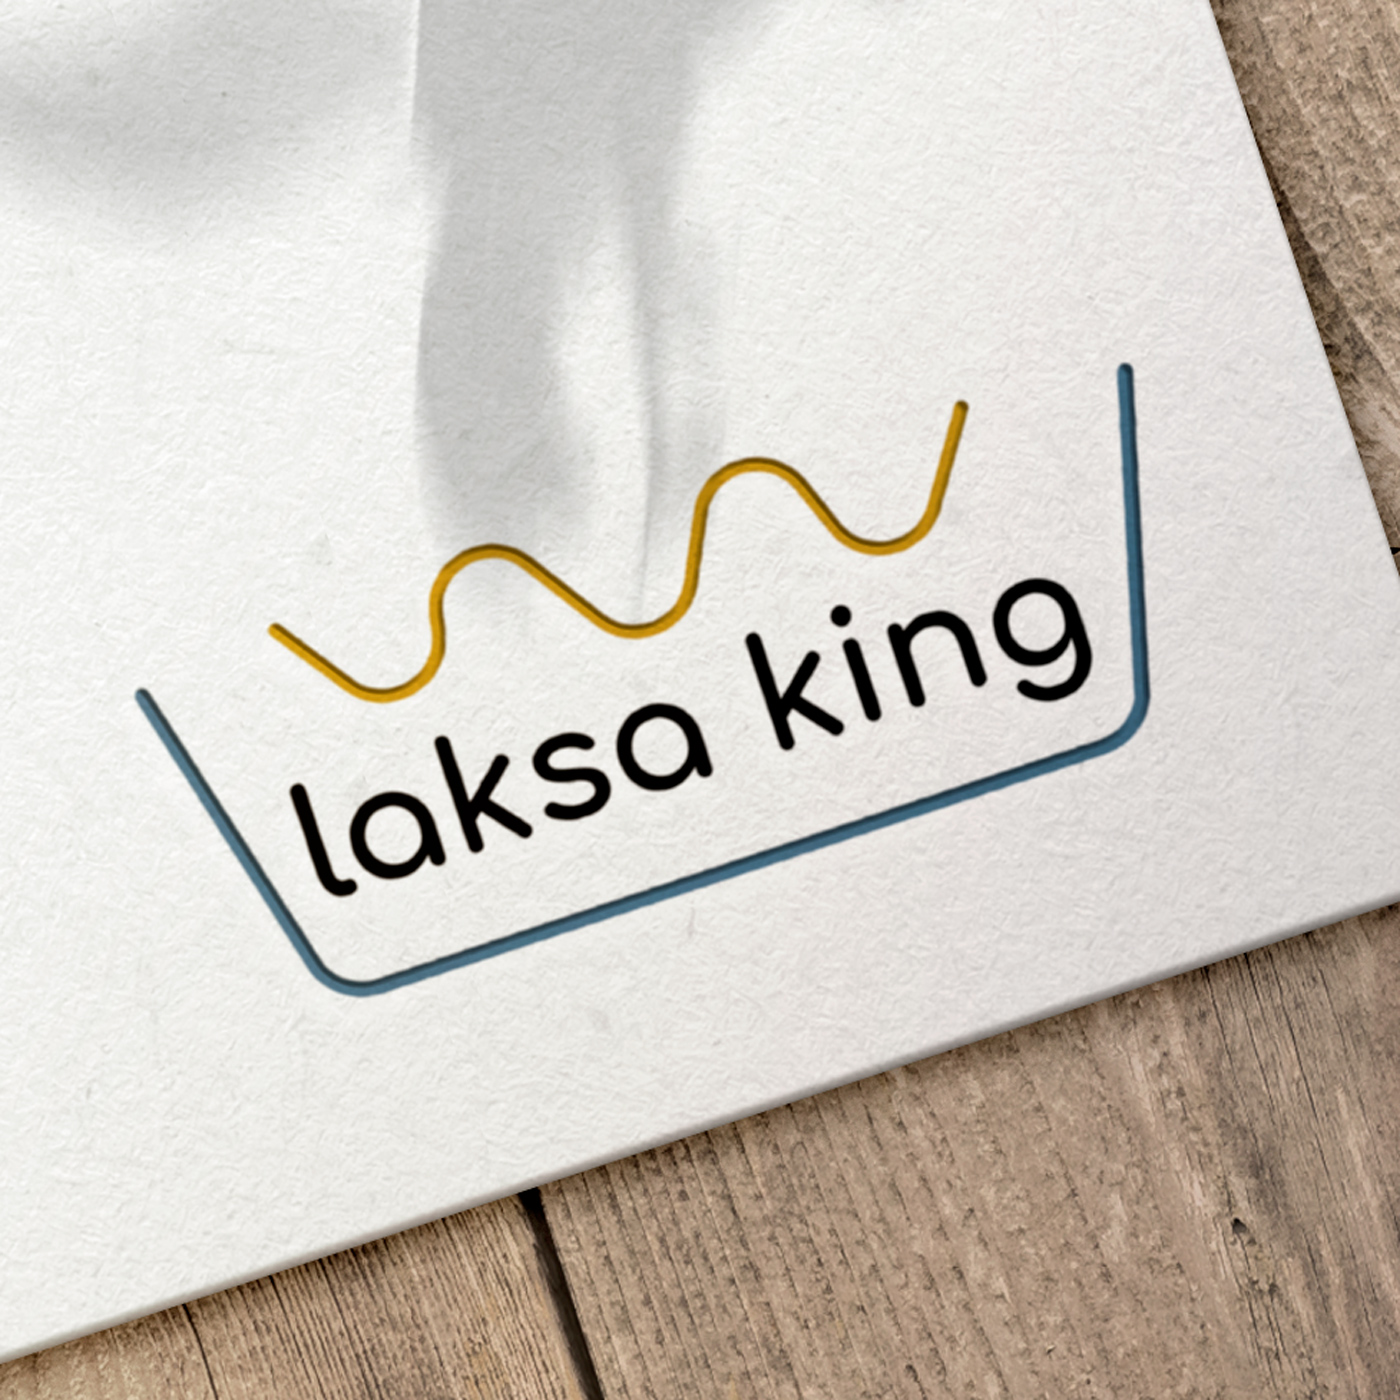 Laksa King Restaurant Logo